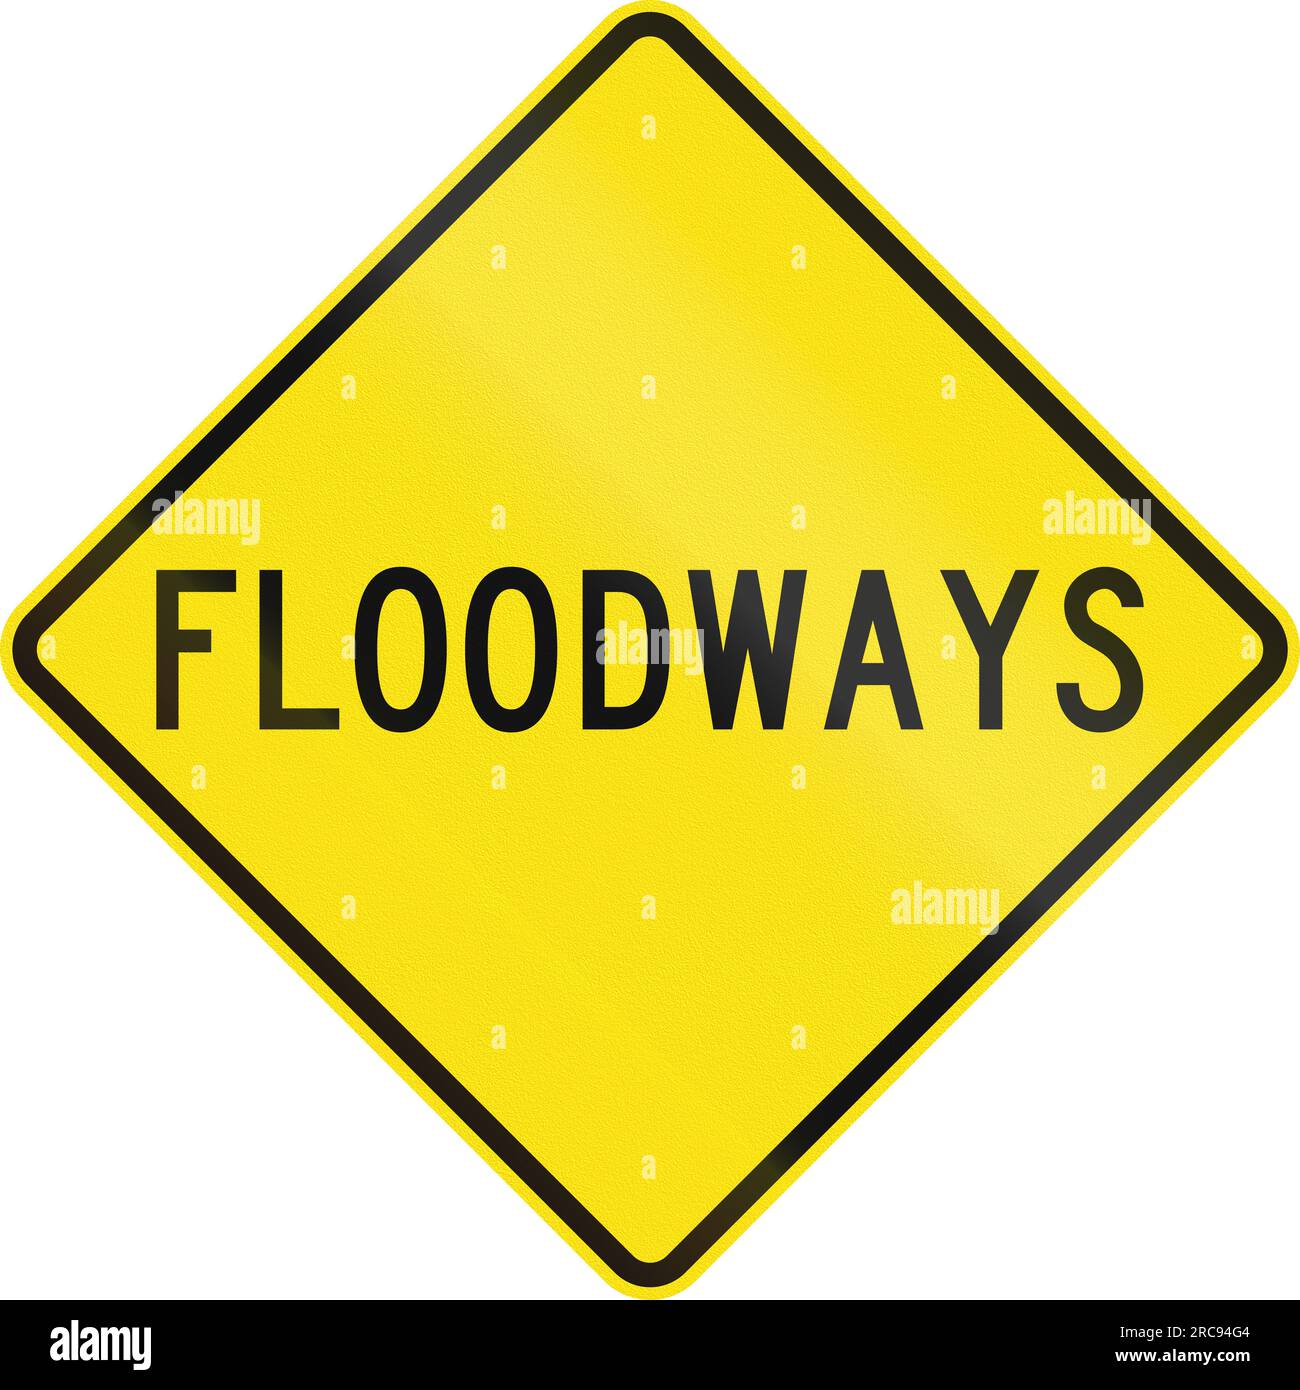 An Australian warning traffic sign - Floodways Stock Photo - Alamy